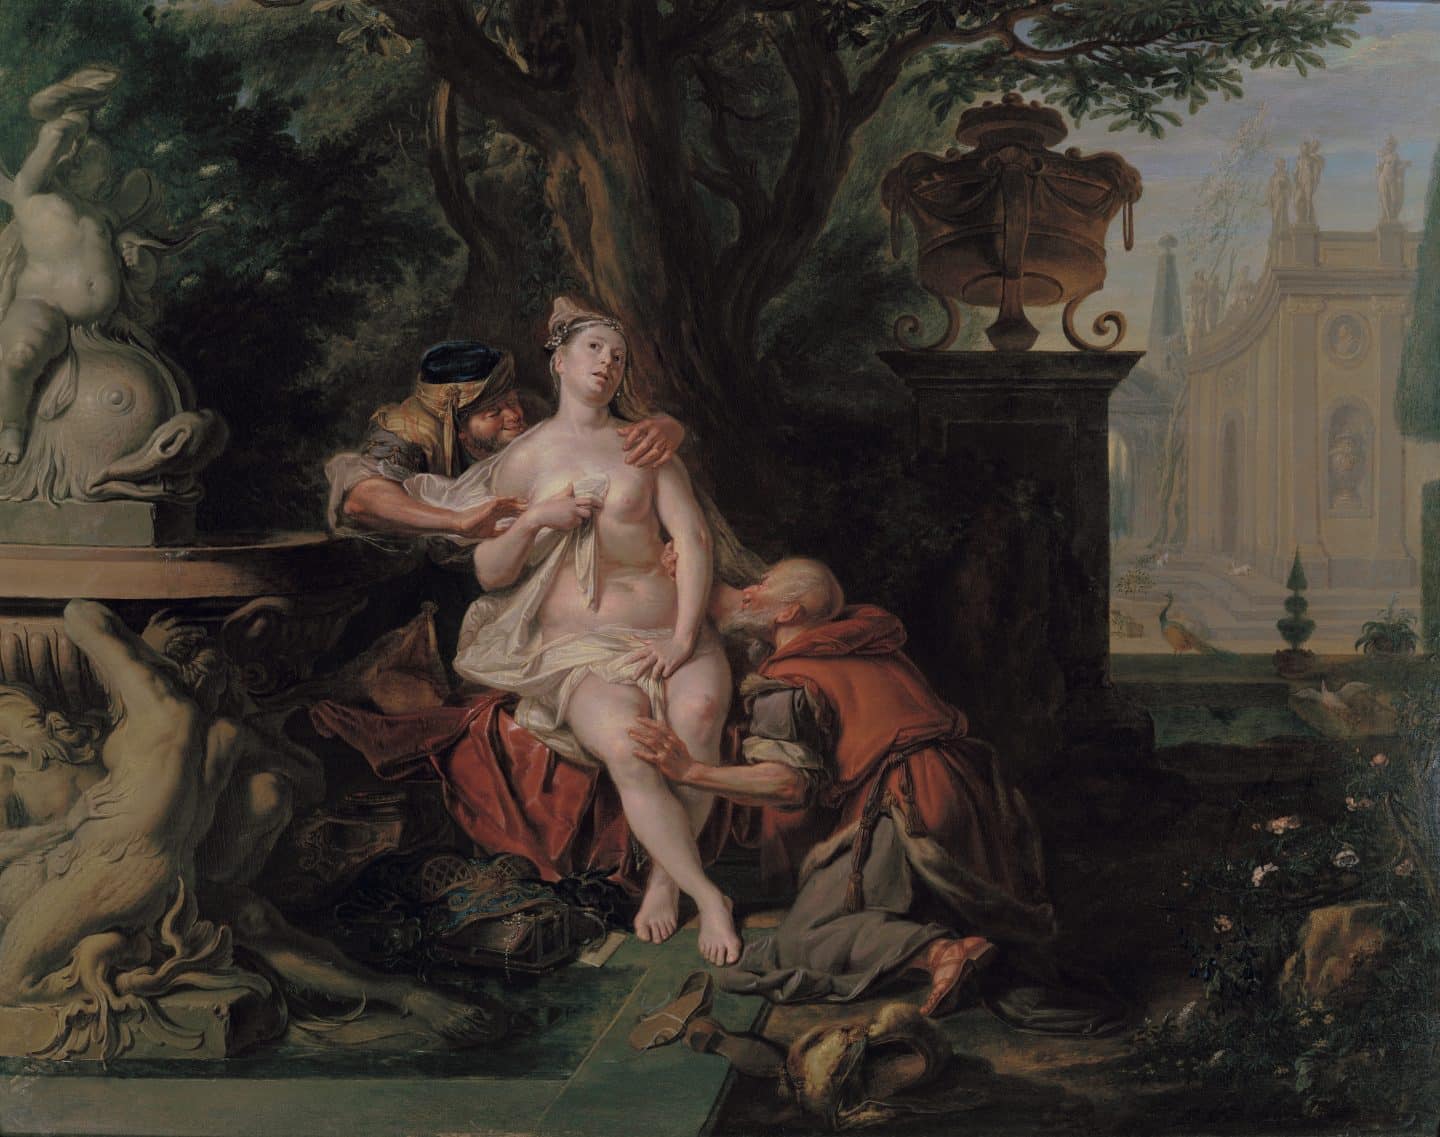 Jacques Ignace de Roore, Susanna and the Elders, about 1735, oil on panel.